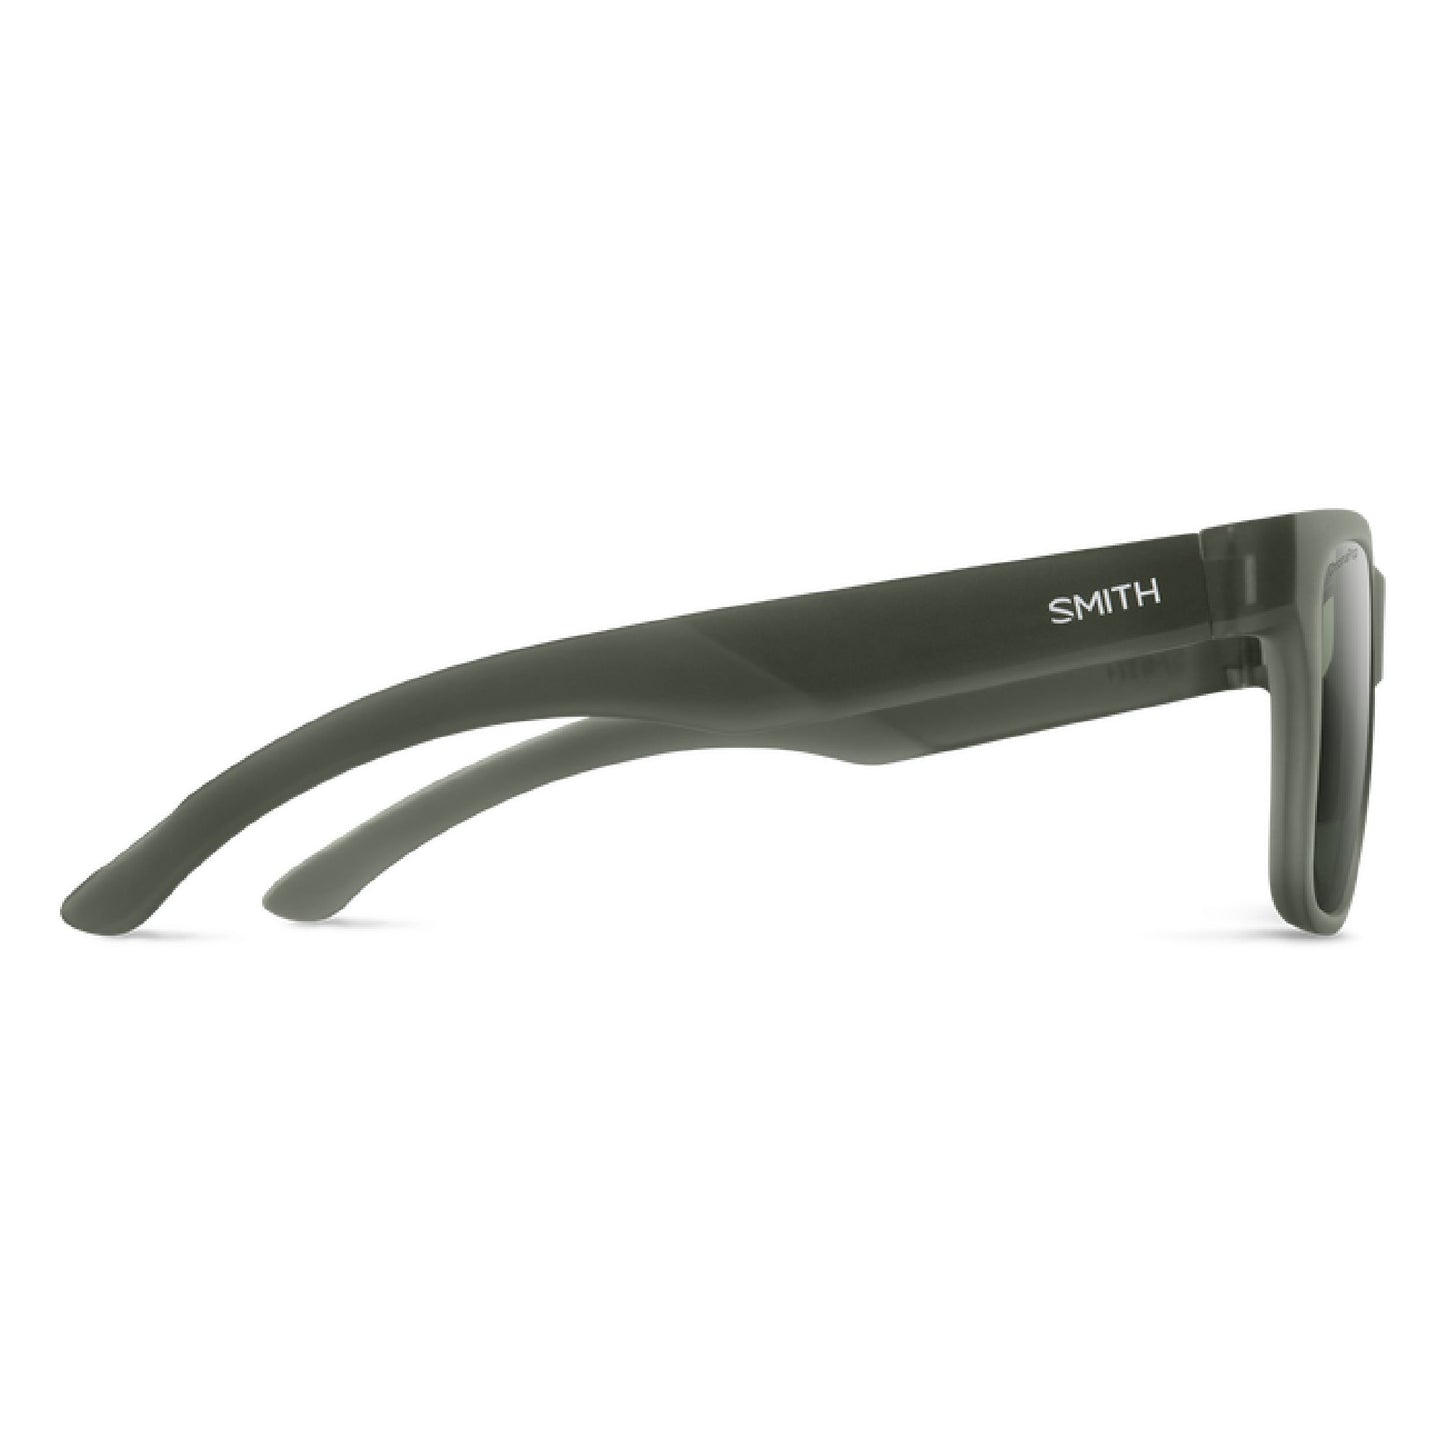 Smith Lowdown 2 Sunglasses Matte Moss Crystal / ChromaPop Polarized Gray Geen Sunglasses